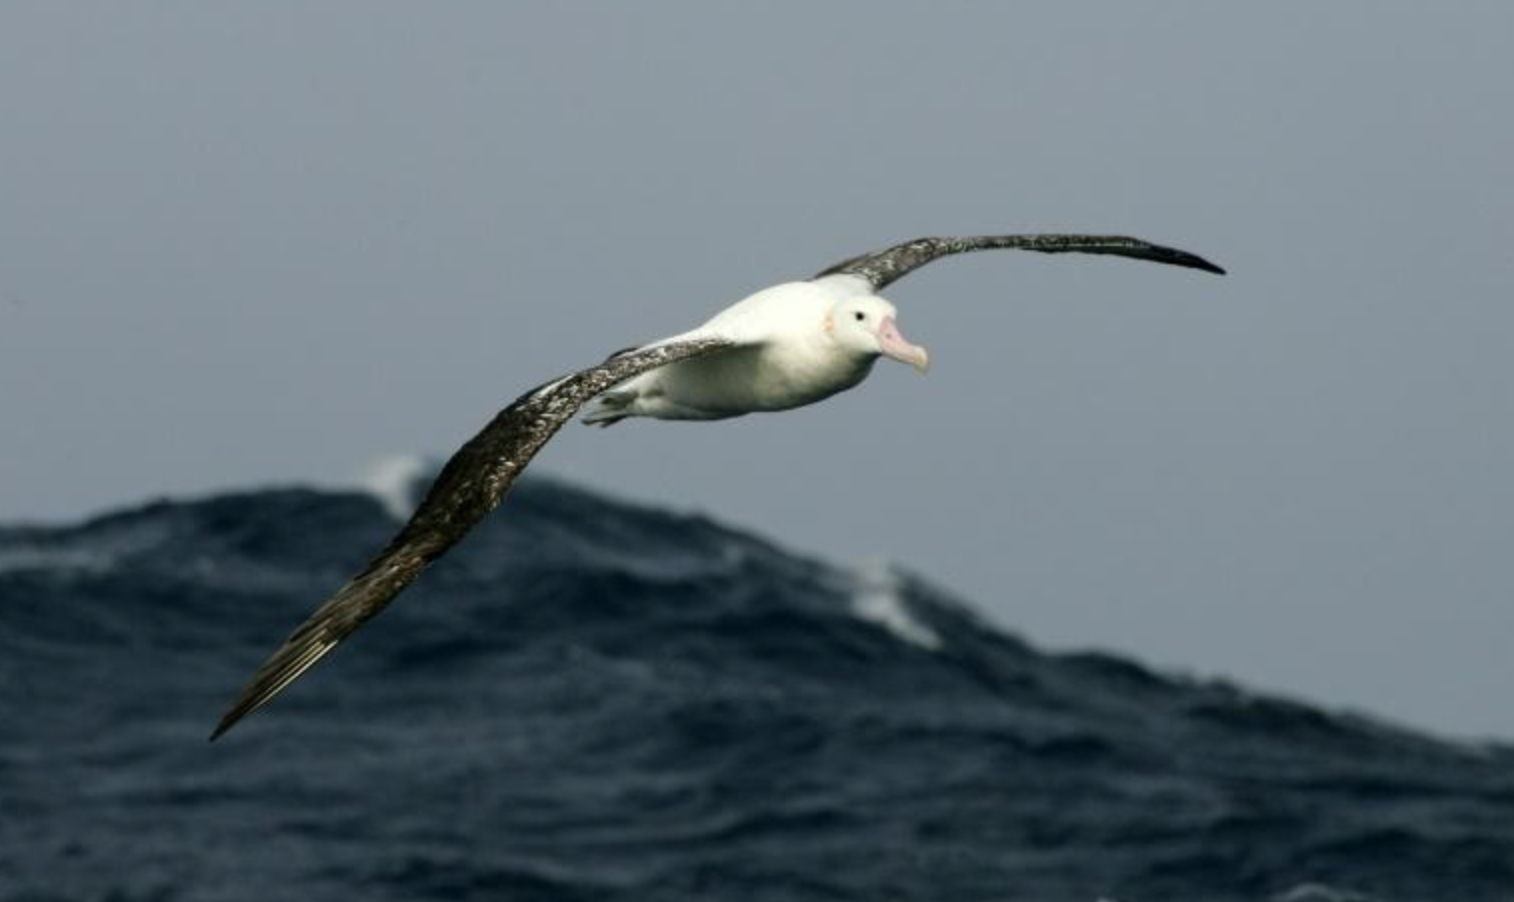 TAAF : Des albatros &laquo;&nbsp;espions des mers&nbsp;&raquo; pour débusquer les navires de pêche illégale dans les mers australes